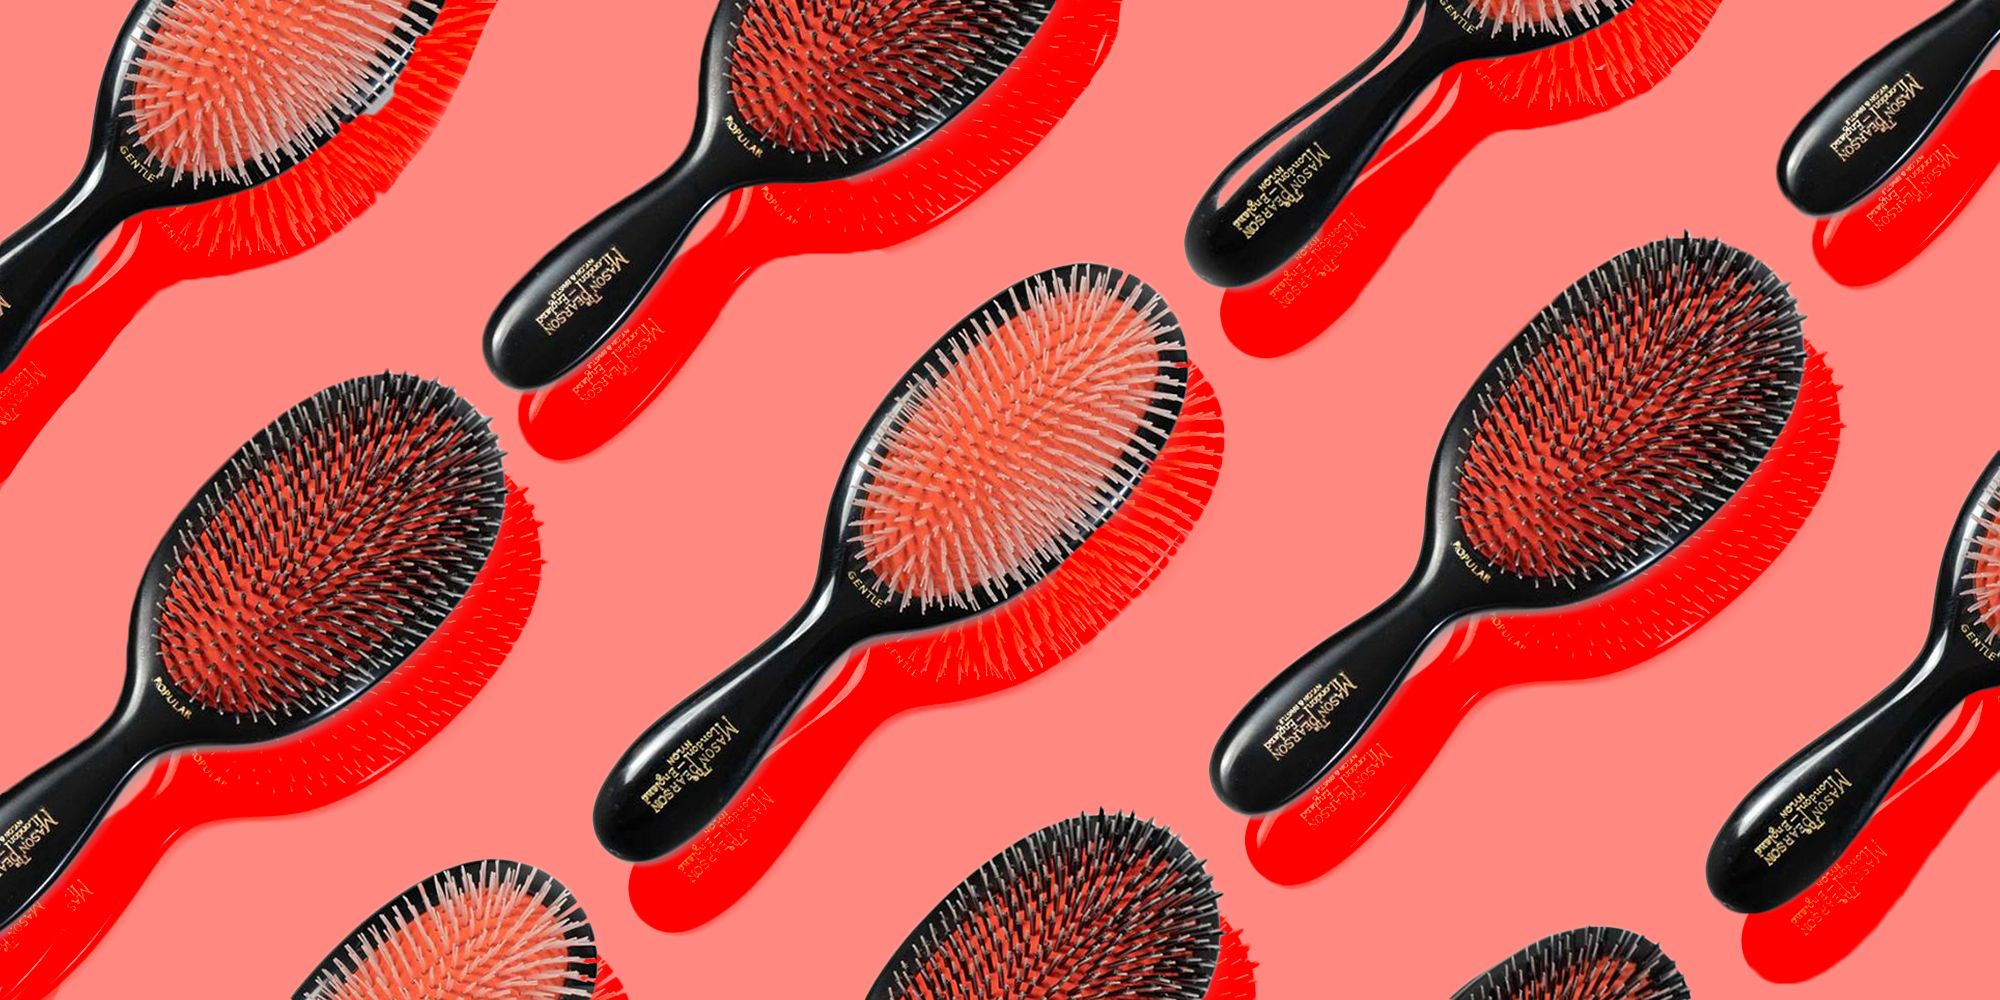 13 Best Boar Bristle Brushes for 2020 - Boar Bristle Hair Brush Reviews